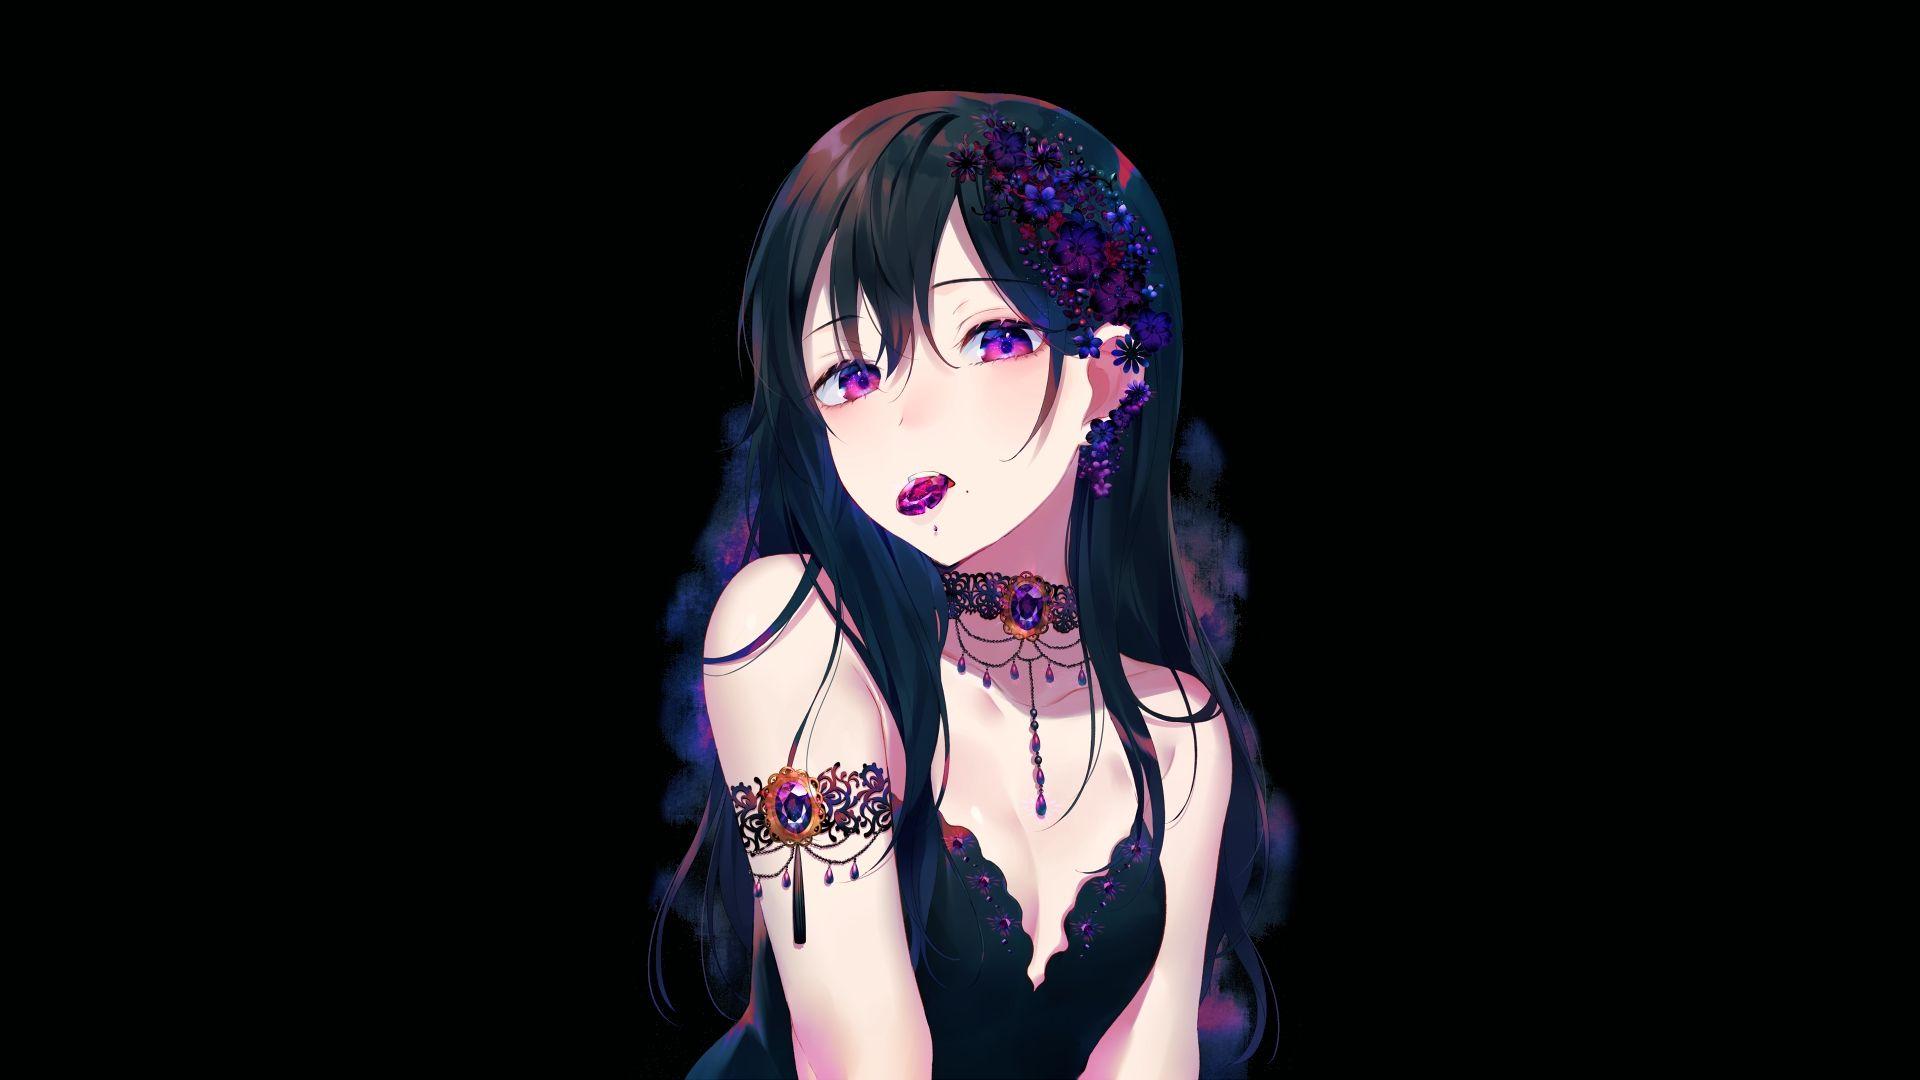 Cute Anime Girl Dark Wallpapers - Top Free Cute Anime Girl Dark